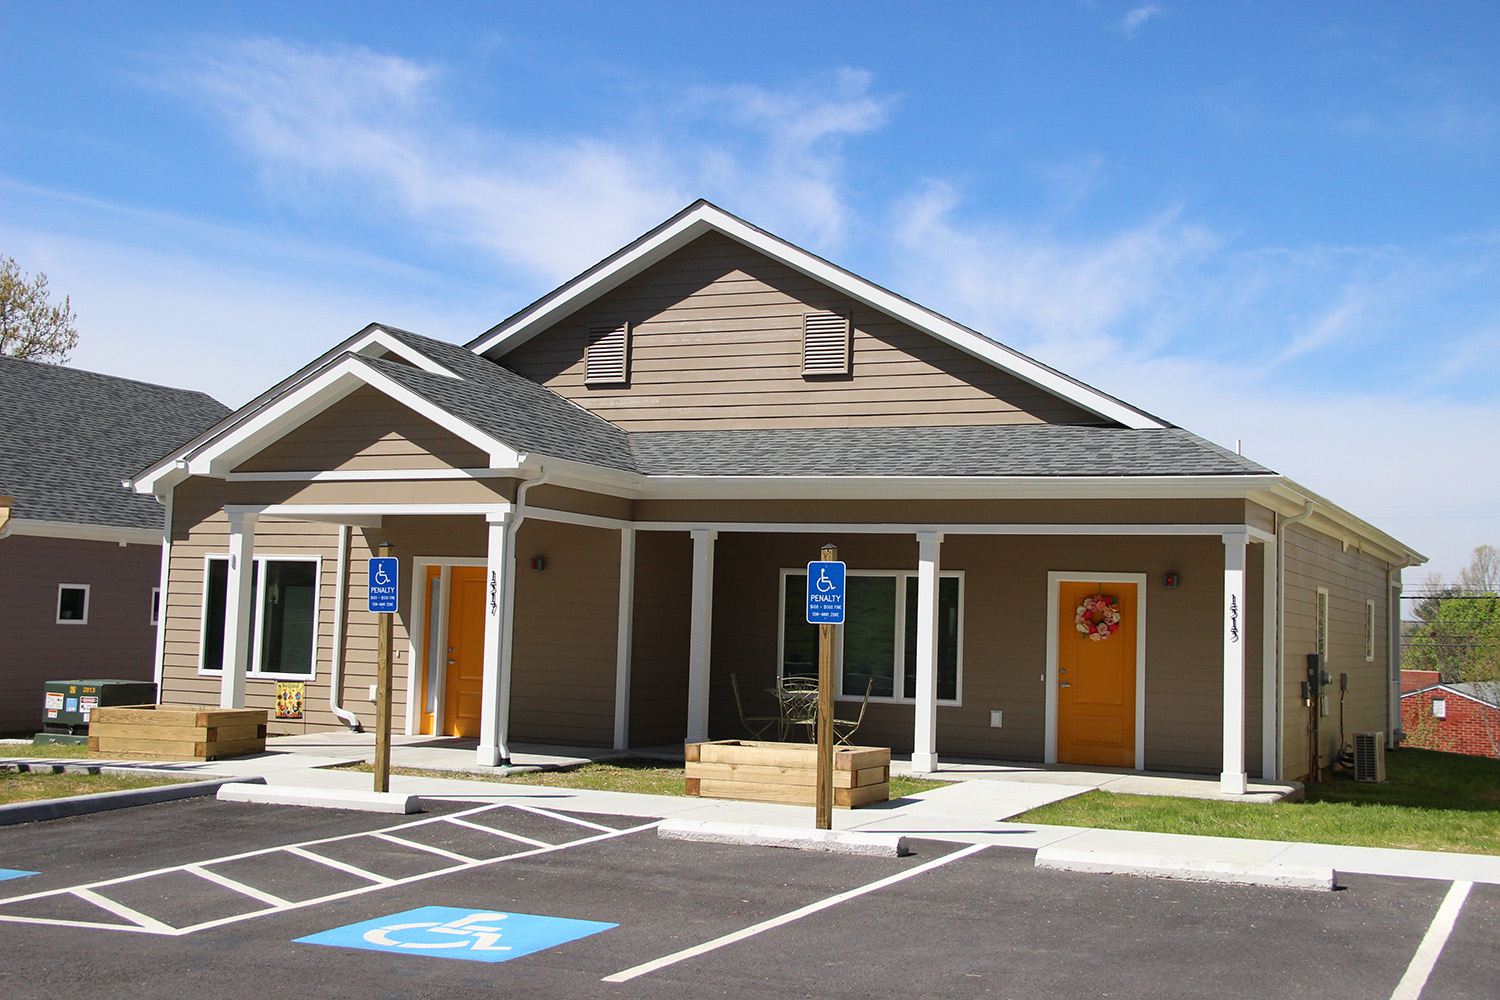 18+ Community housing partners training center information